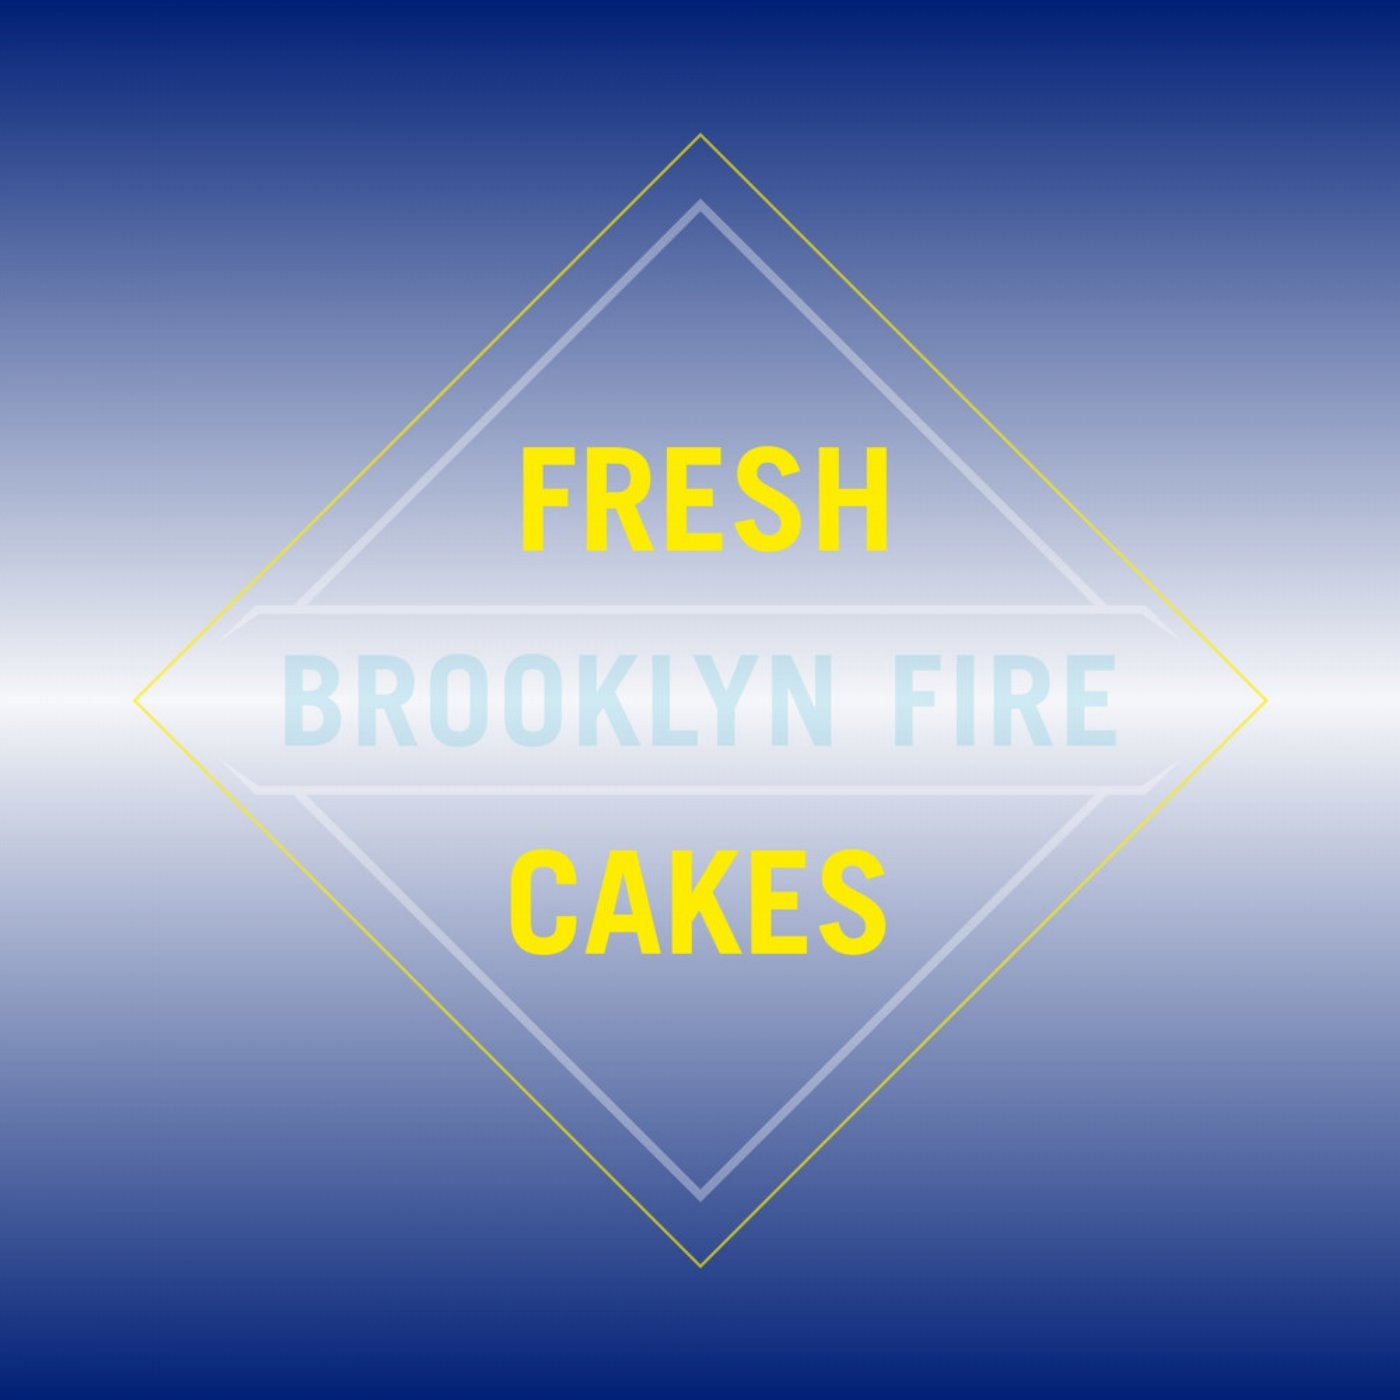 Fresh Cakes, Vol. 1